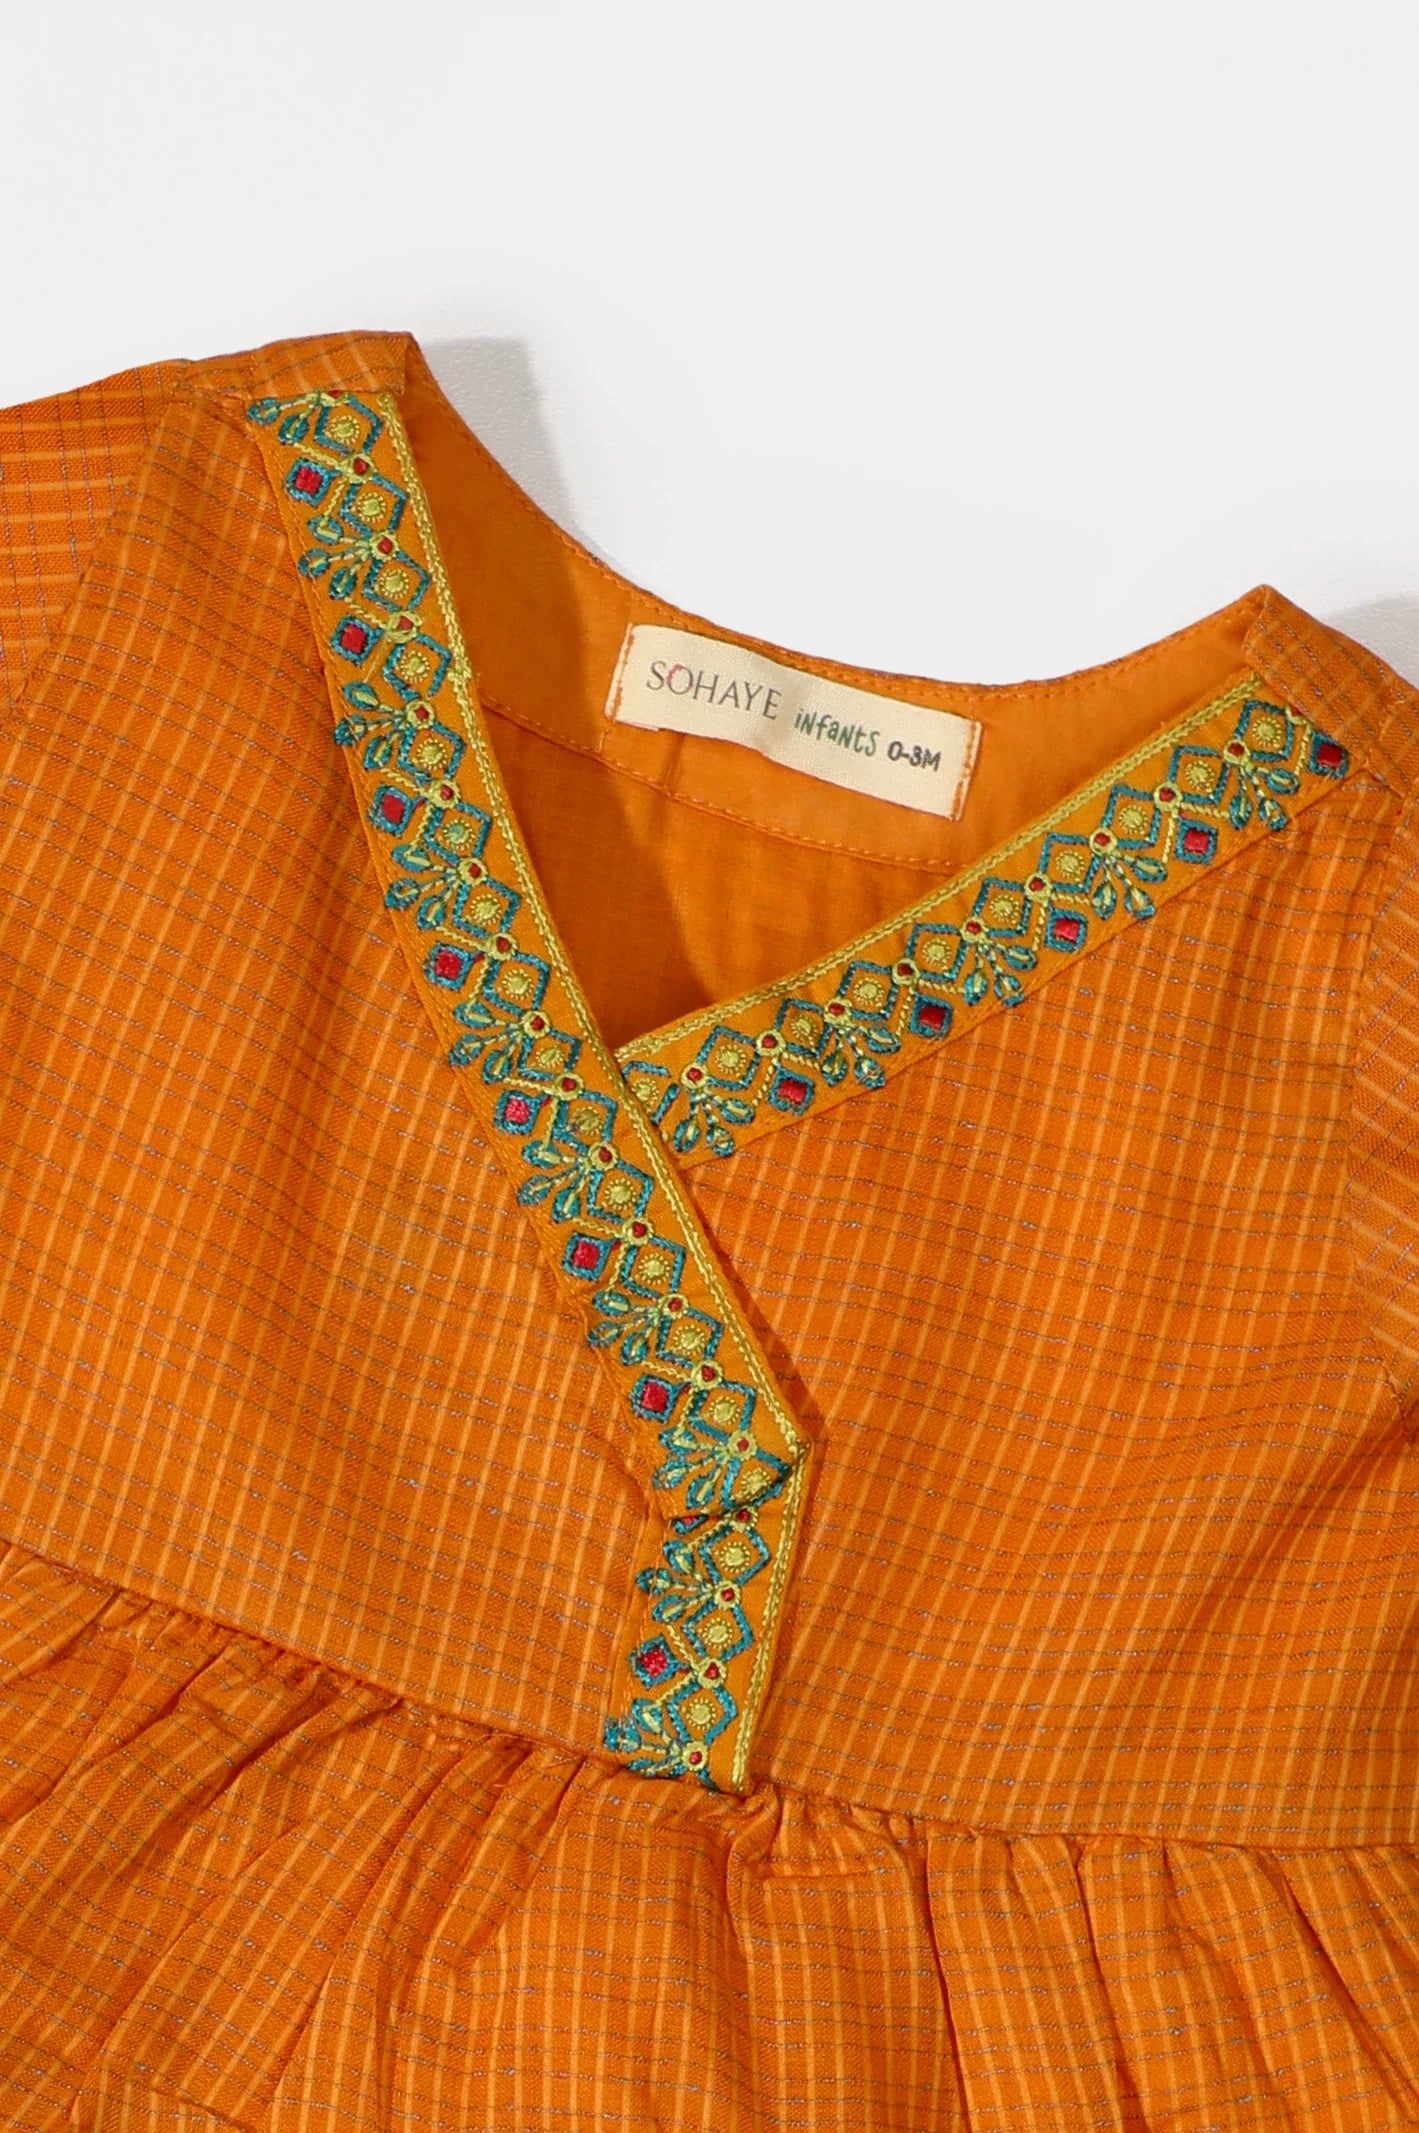 Orange Infant's 2PC Suit From Sohaye